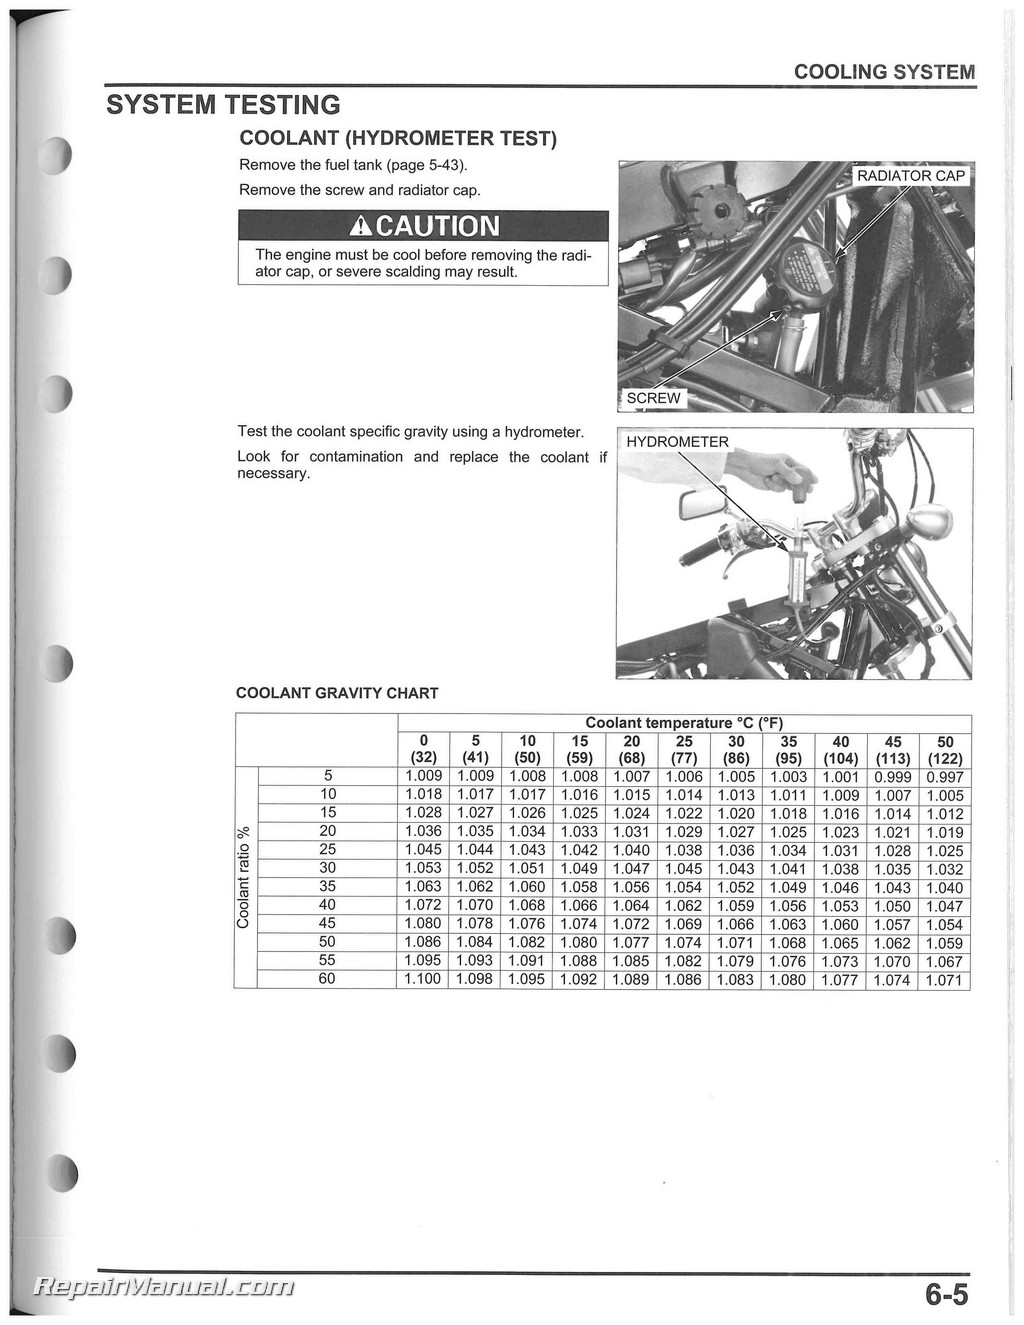 2010 honda stateline service manual